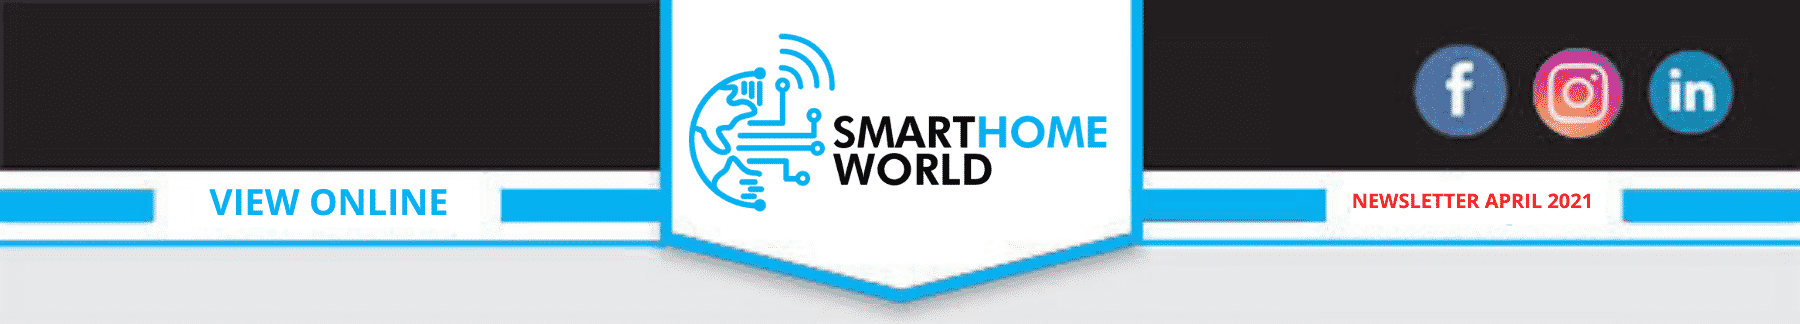 Smart Home World Weekly Newsletter